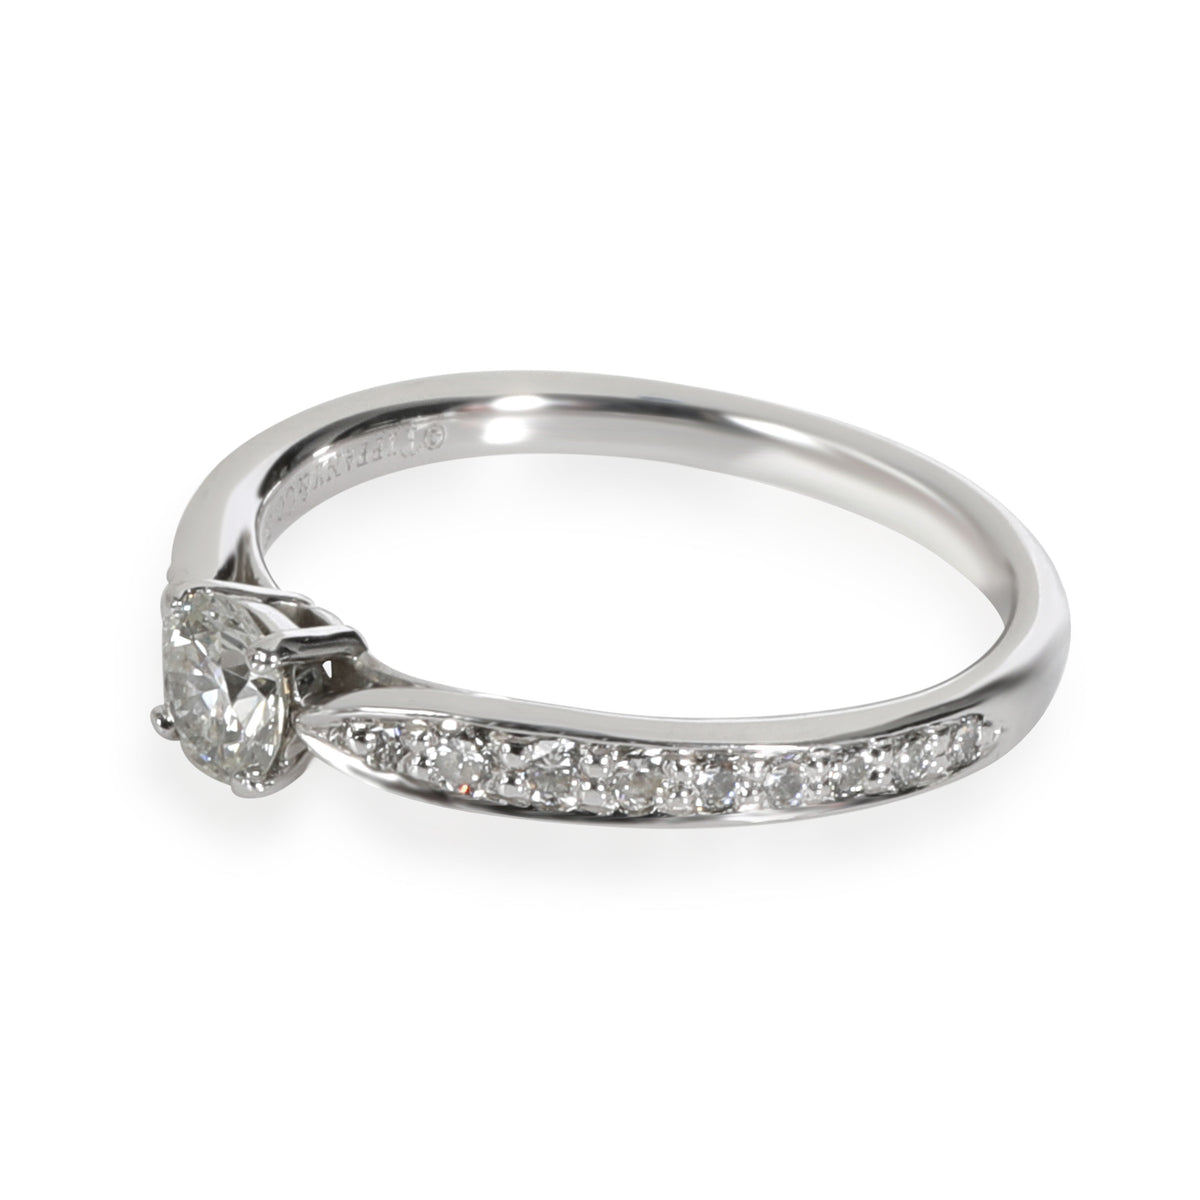 Tiffany & Co. Harmony Diamond Engagement Ring in  Platinum I VVS2 0.40 CT